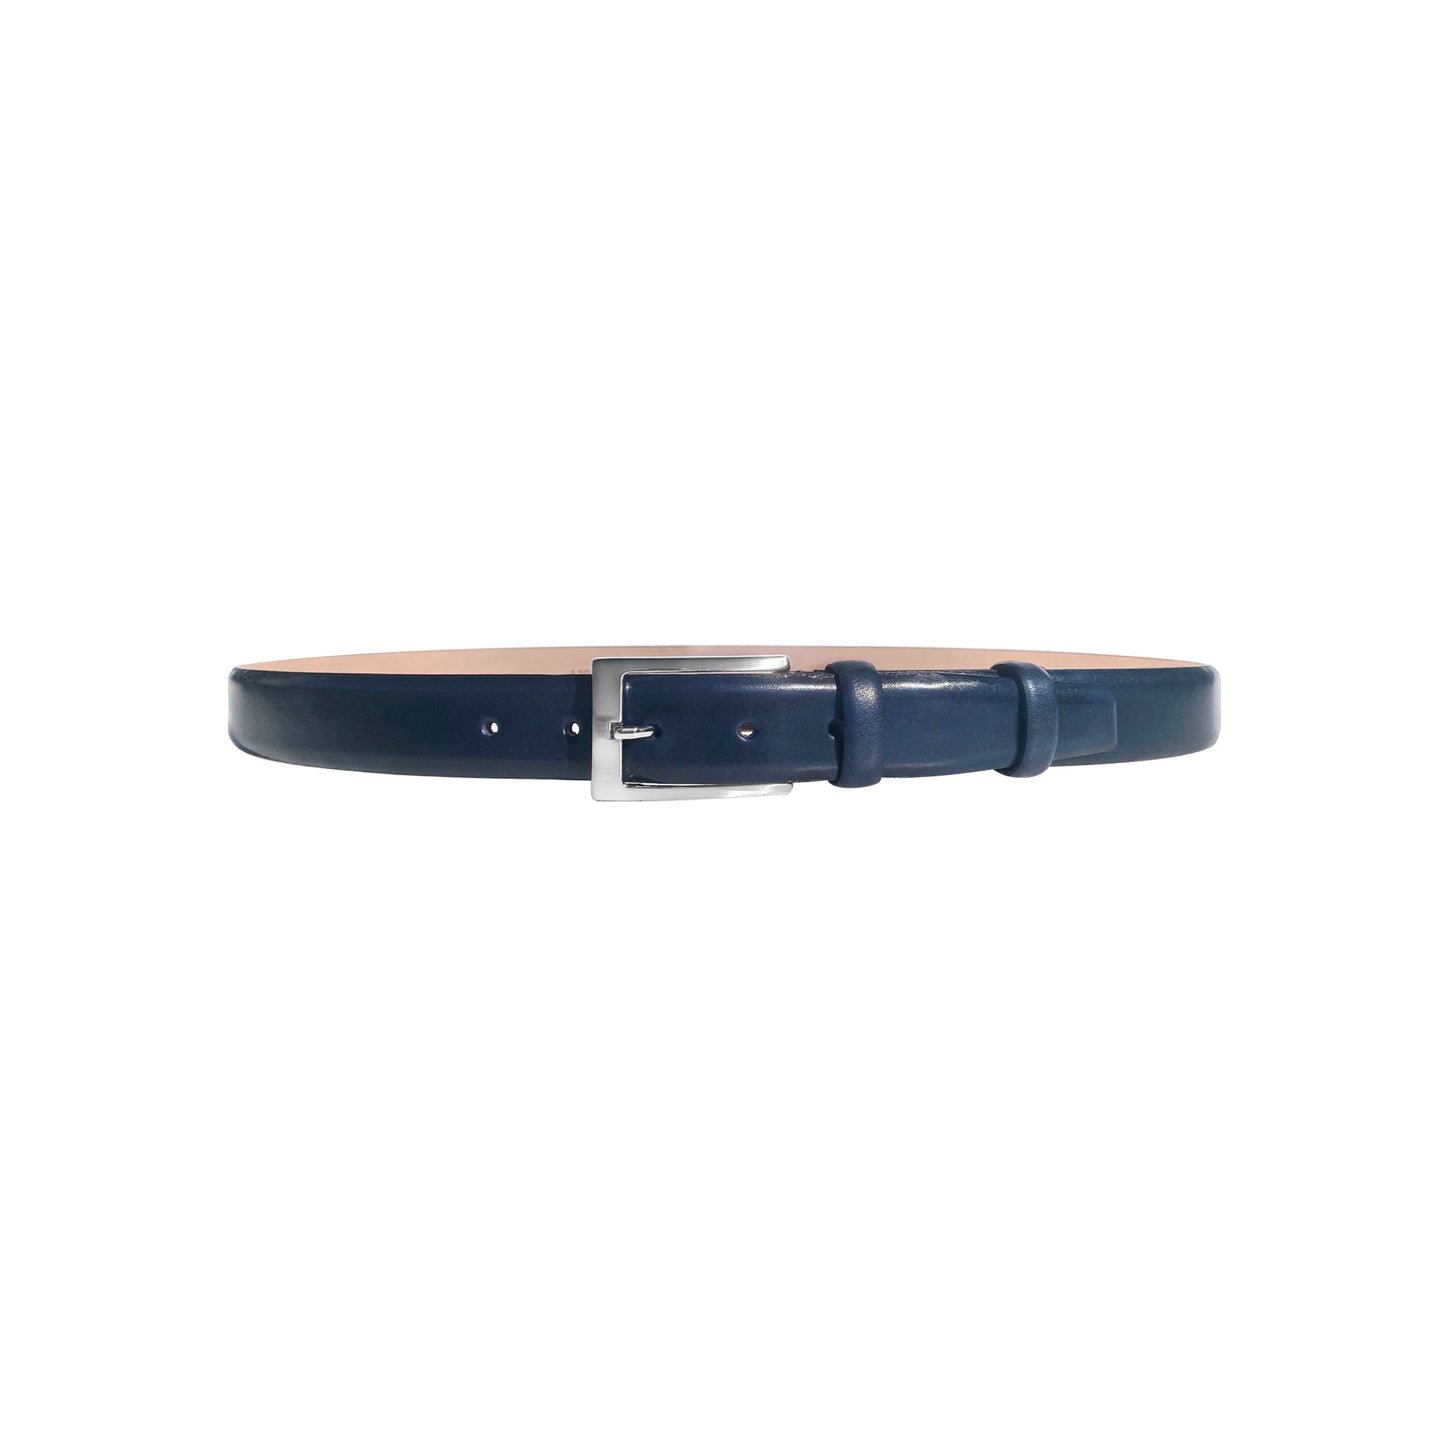 CBelt -1547 Plain Leather Belt - Navy